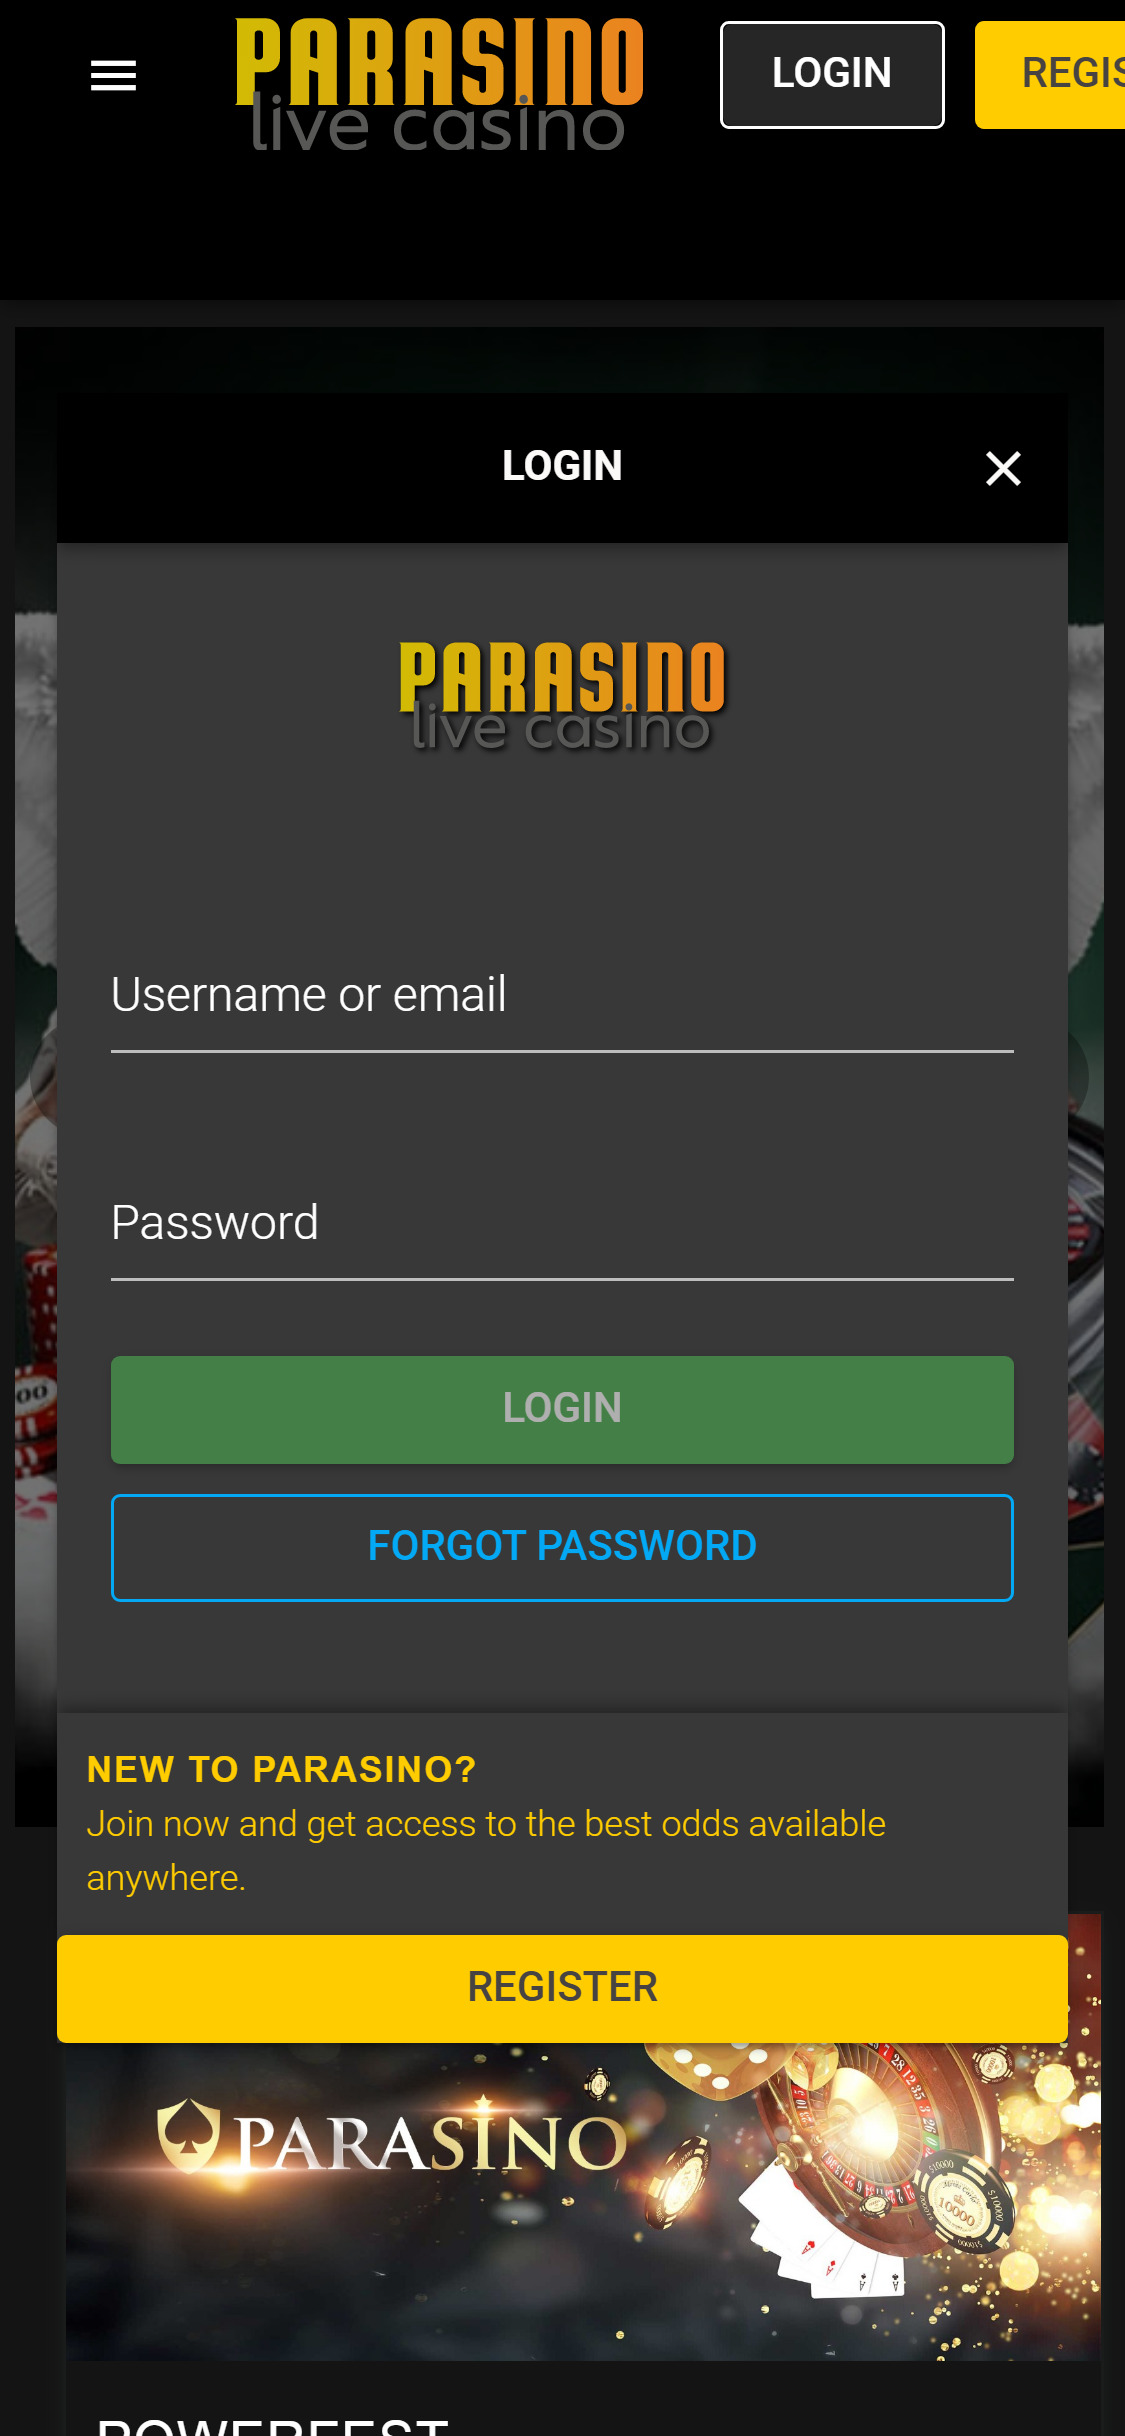 Parasino Casino Mobile Login Review